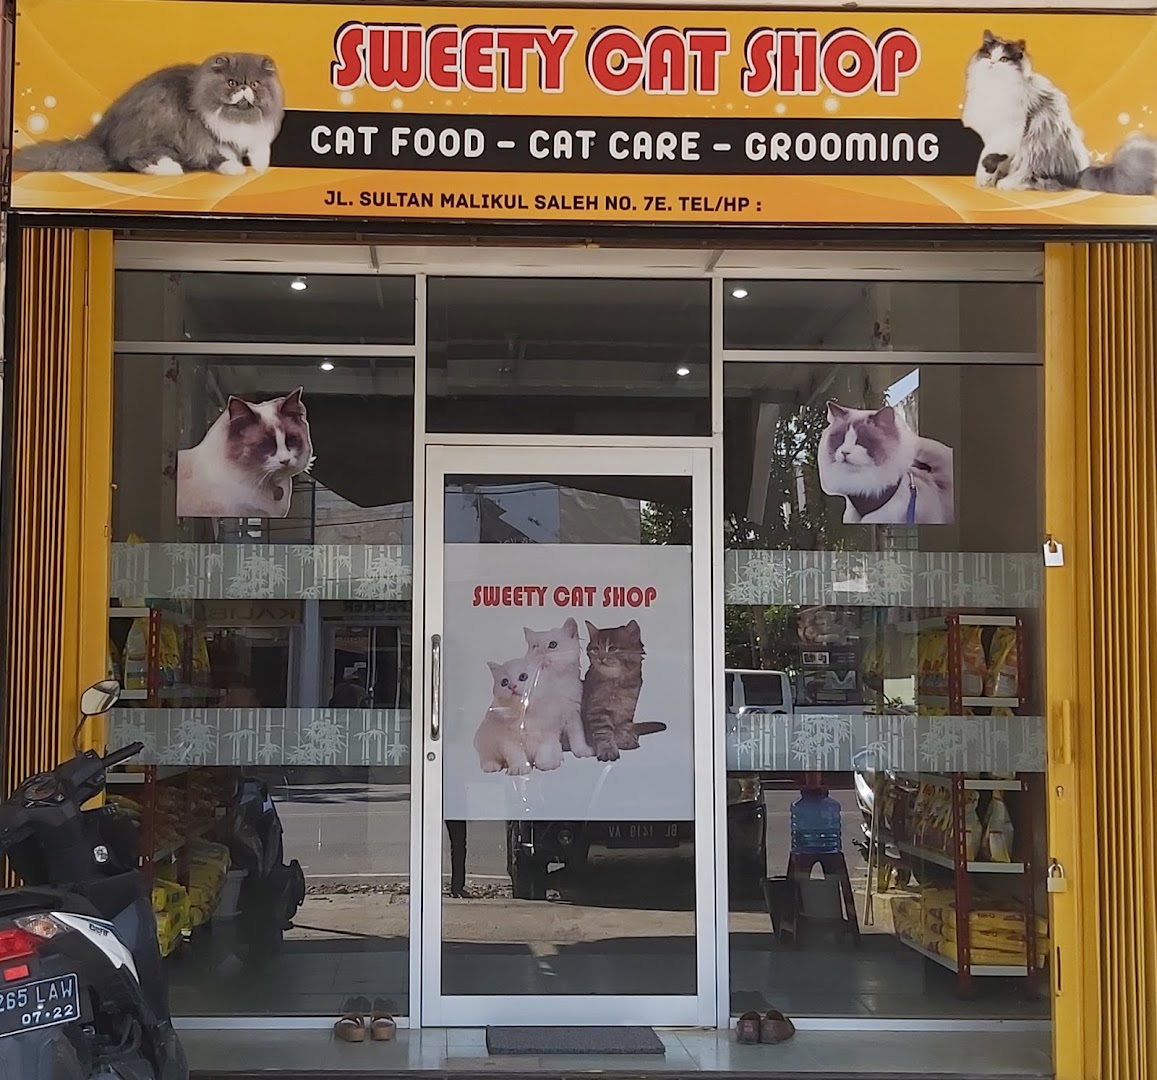 Gambar Sweety Catshop